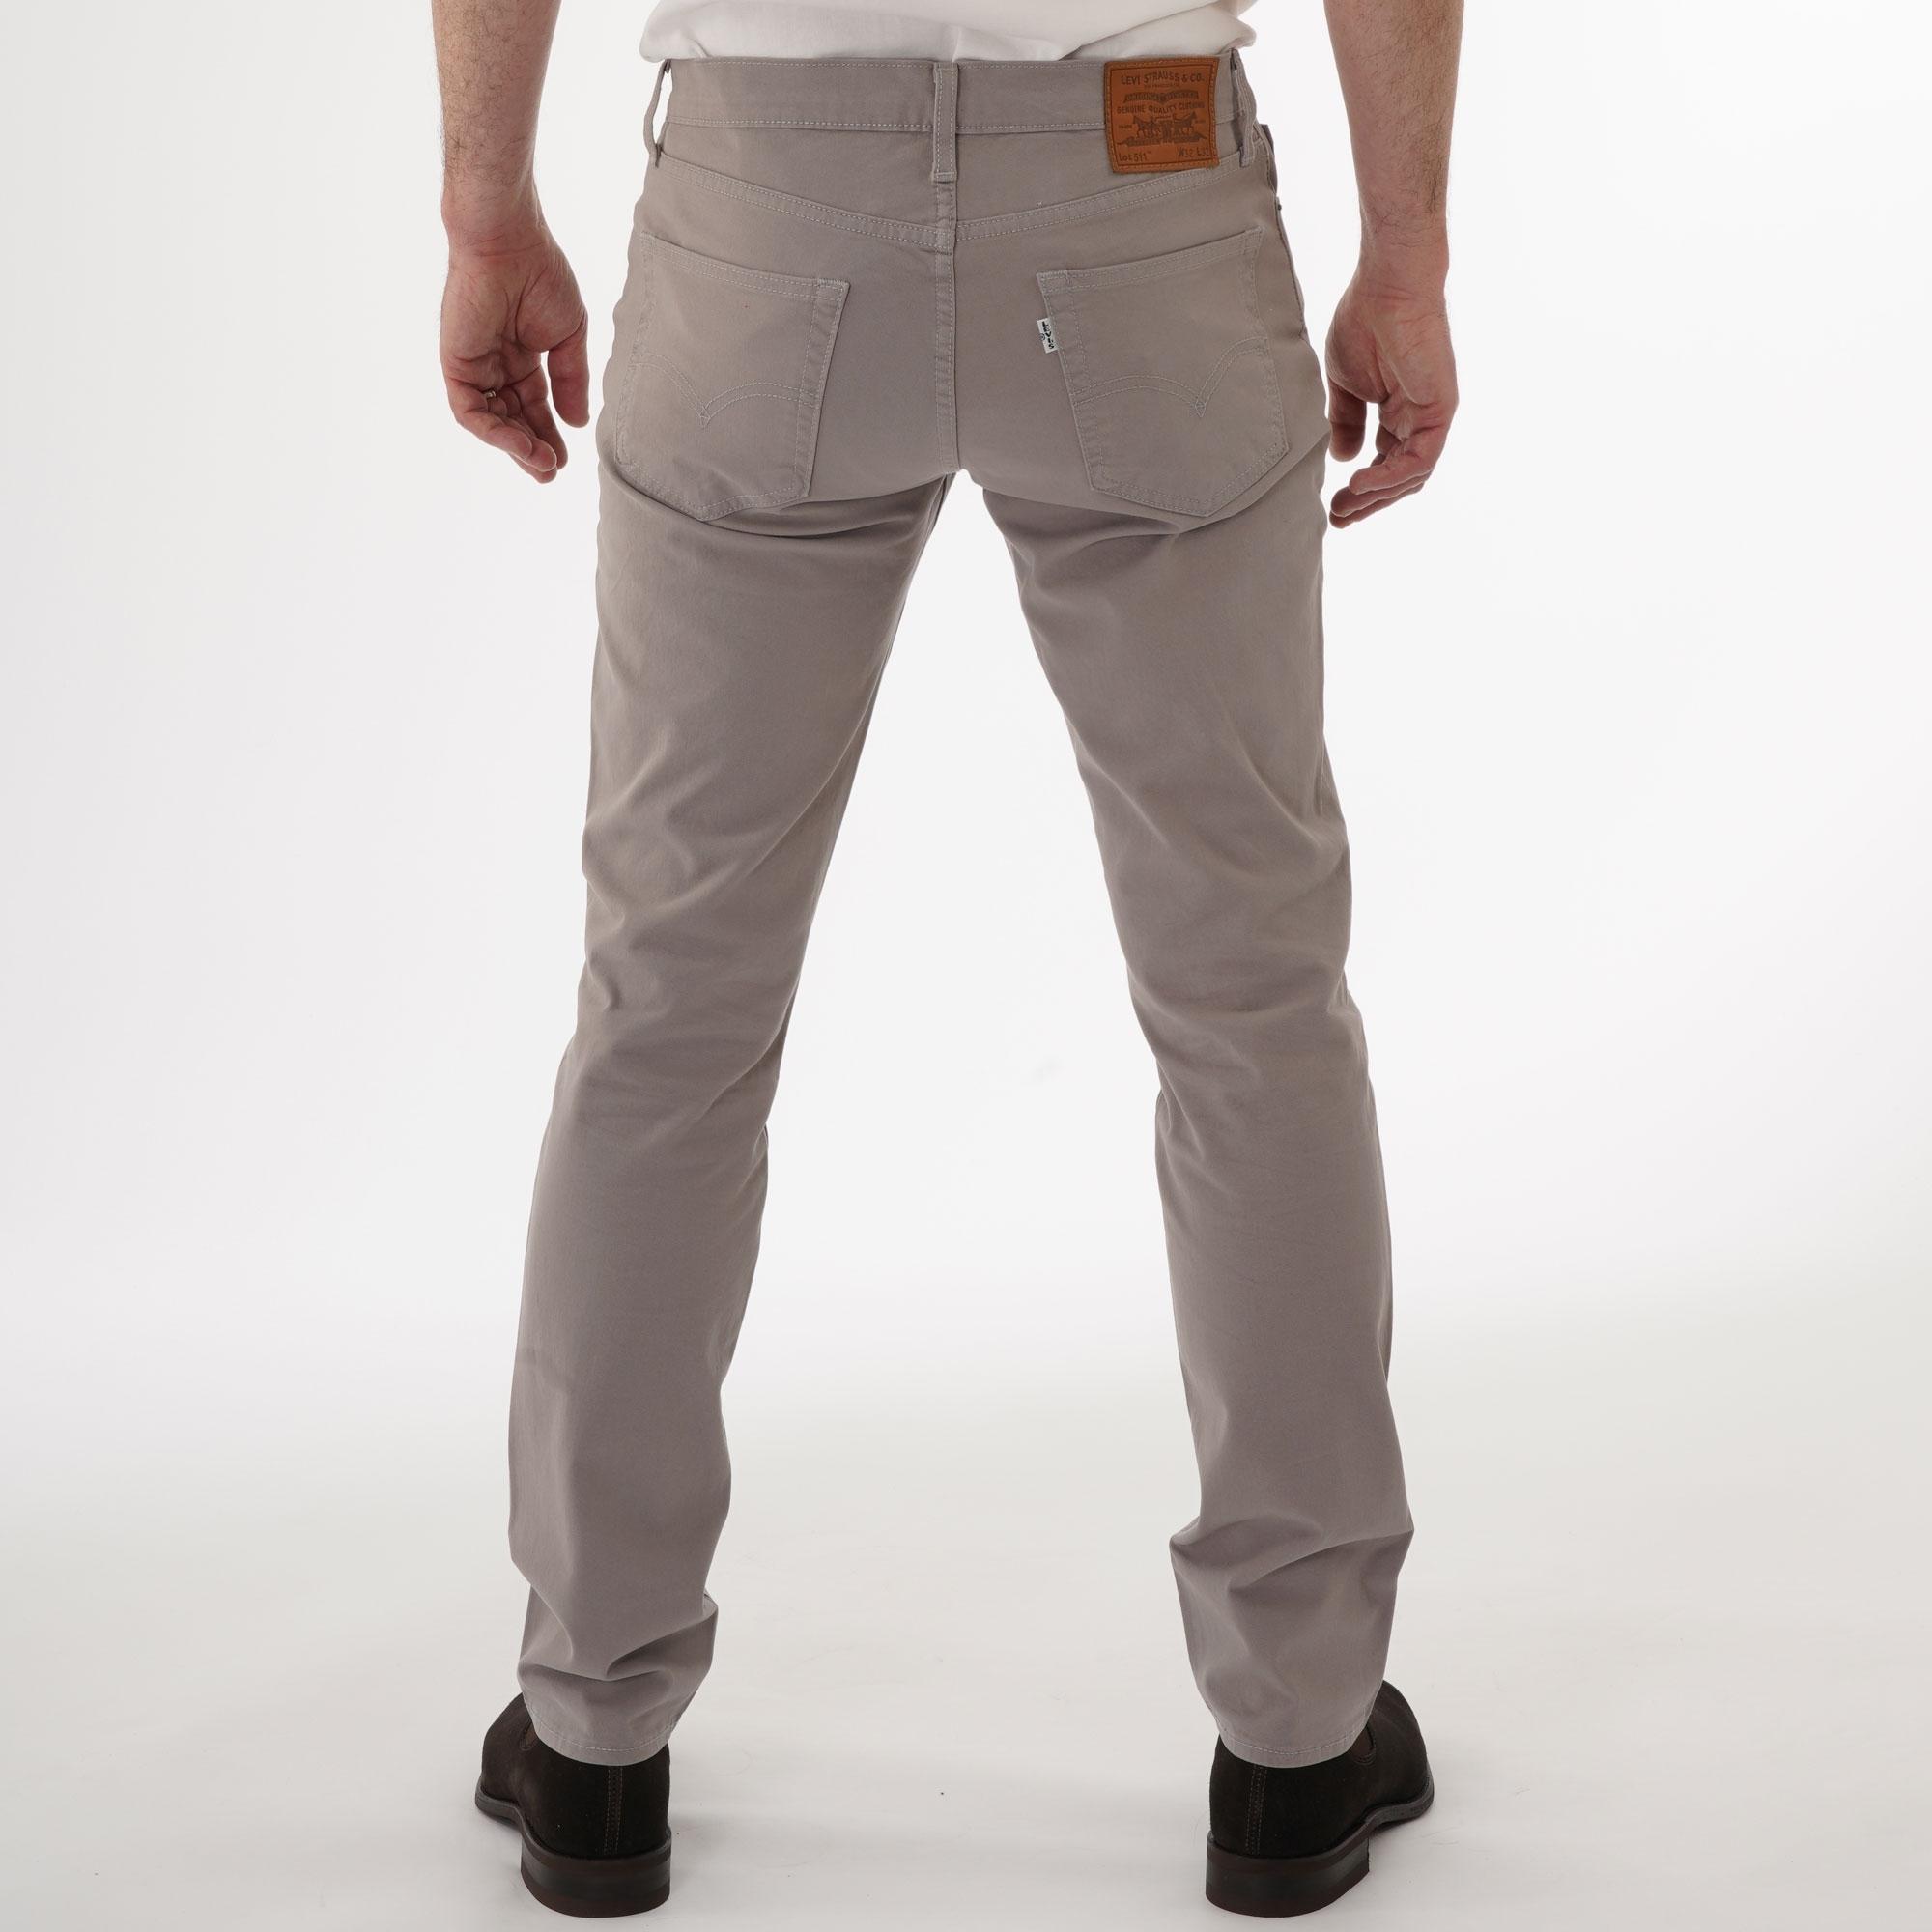 Levi's Denim Levi's Levi's 511 Slim Fit Jeans in Grey (Gray) for Men - Lyst